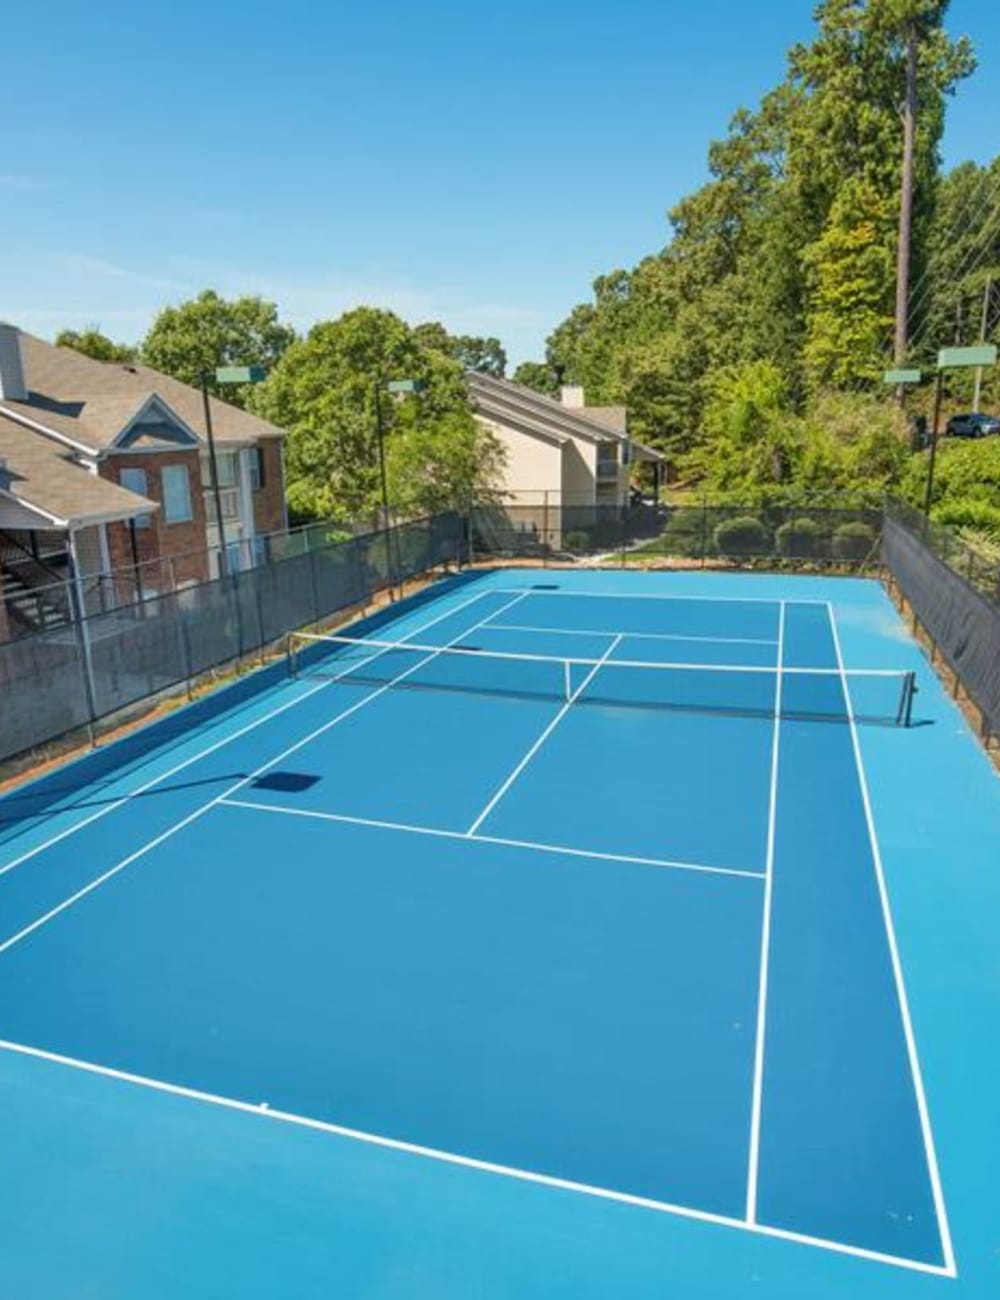 An outdoor tennis court at Chace Lake Villas in Birmingham, Alabama